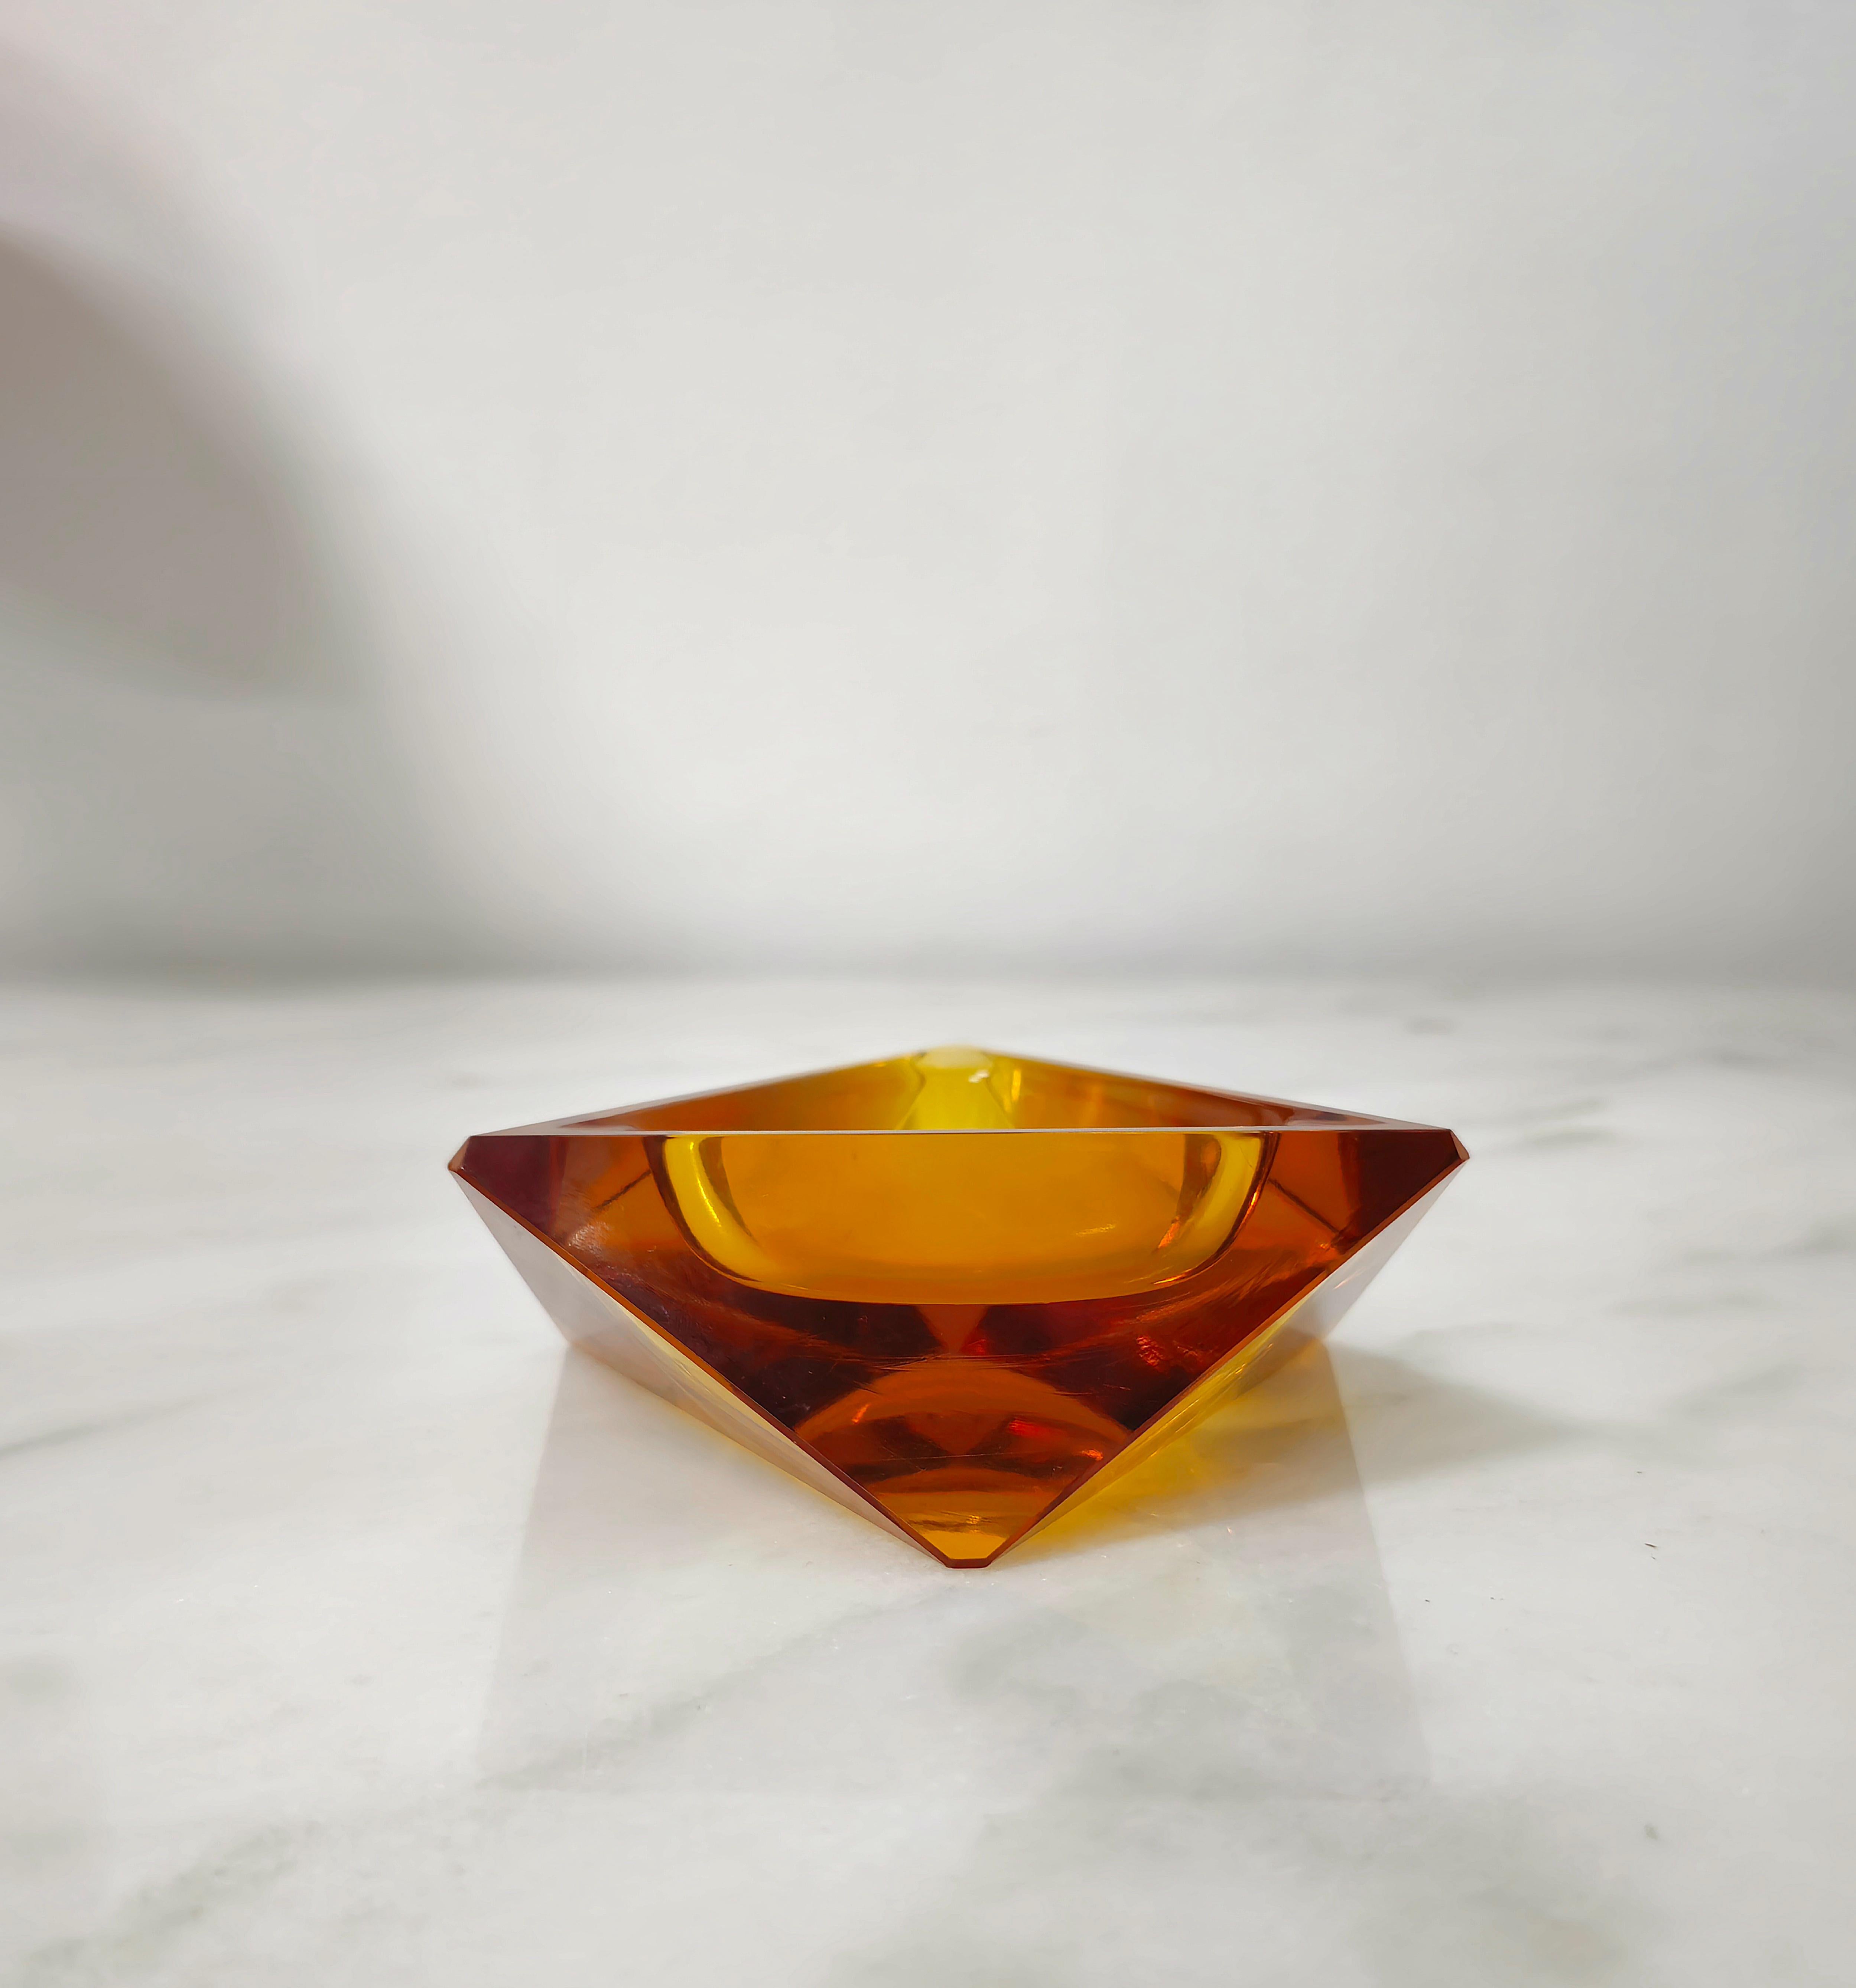 Aschenbecher Dekoratives Objekt Flavio Poli Murano Glas Midcentury Italian Design 70s (Muranoglas)